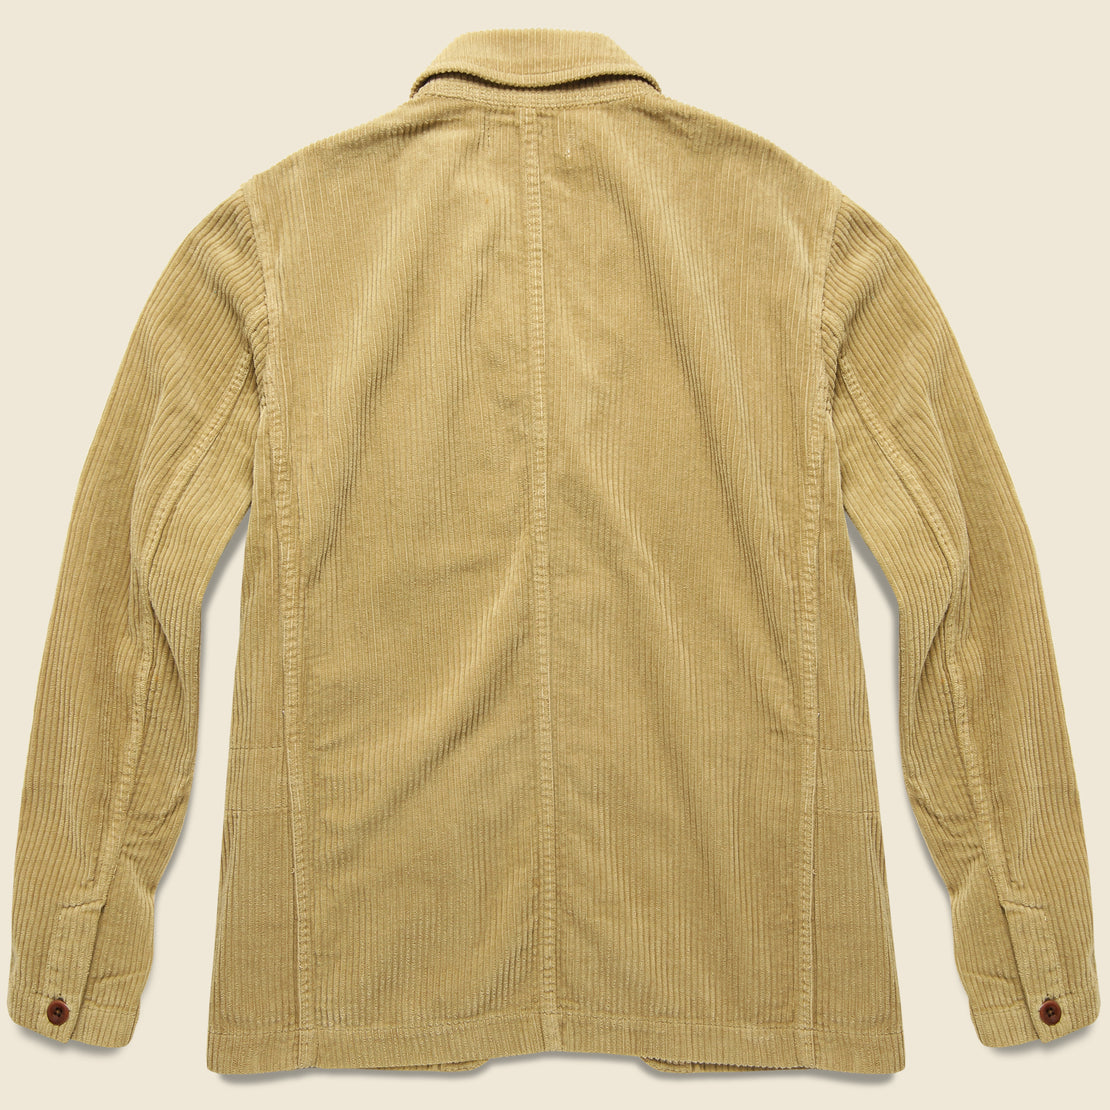 Rugged Corduroy Mill Blazer - Khaki - Alex Mill - STAG Provisions - Suiting - Sport Coat